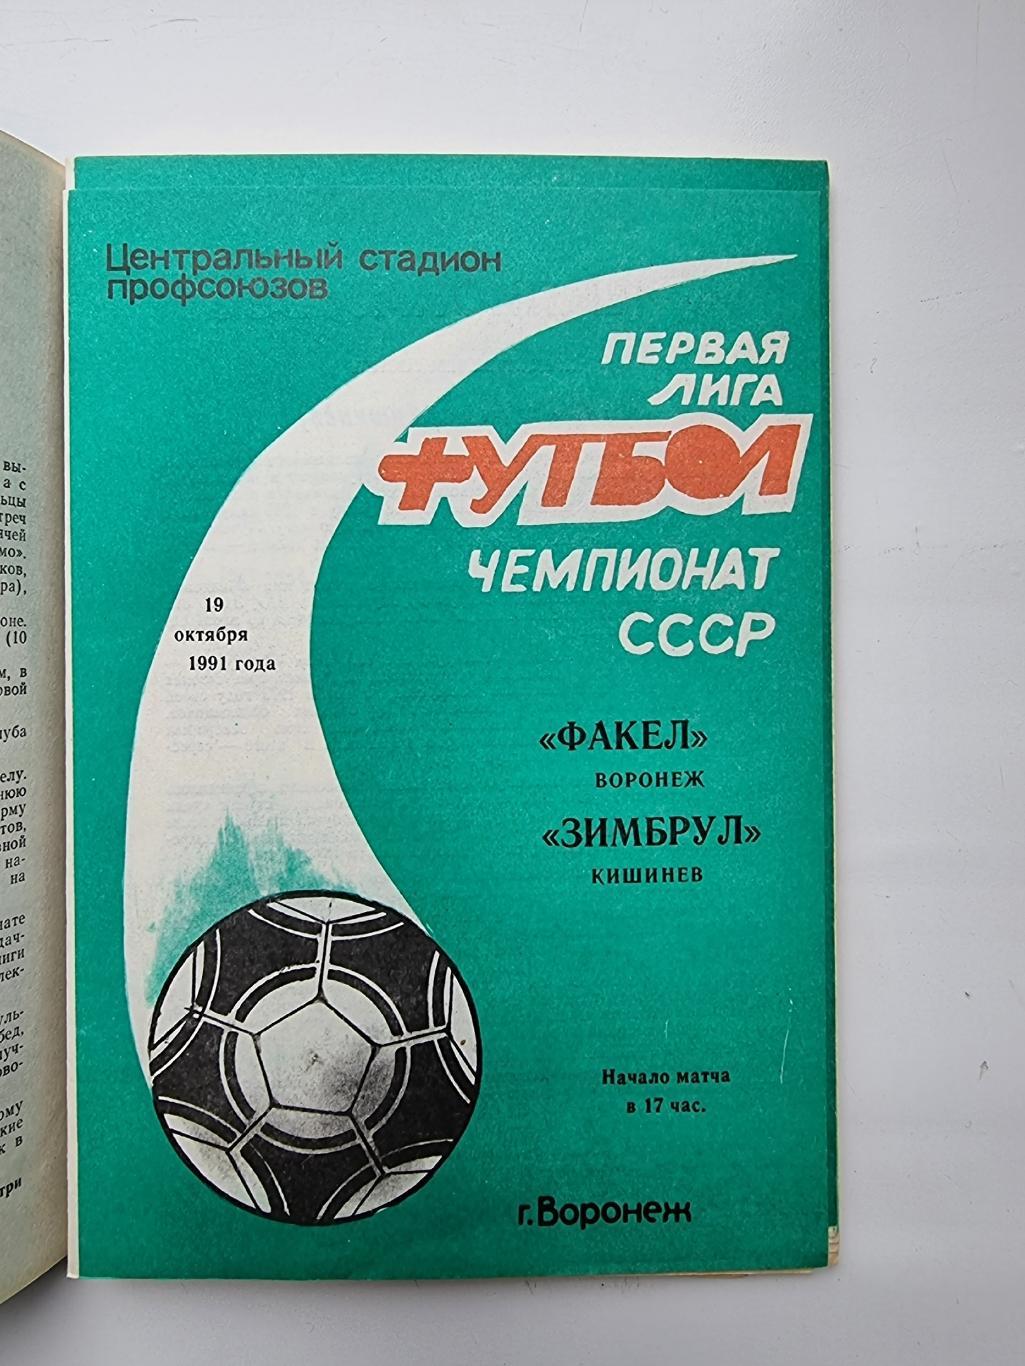 Факел Воронеж - Зимбрул Кишинев 1991